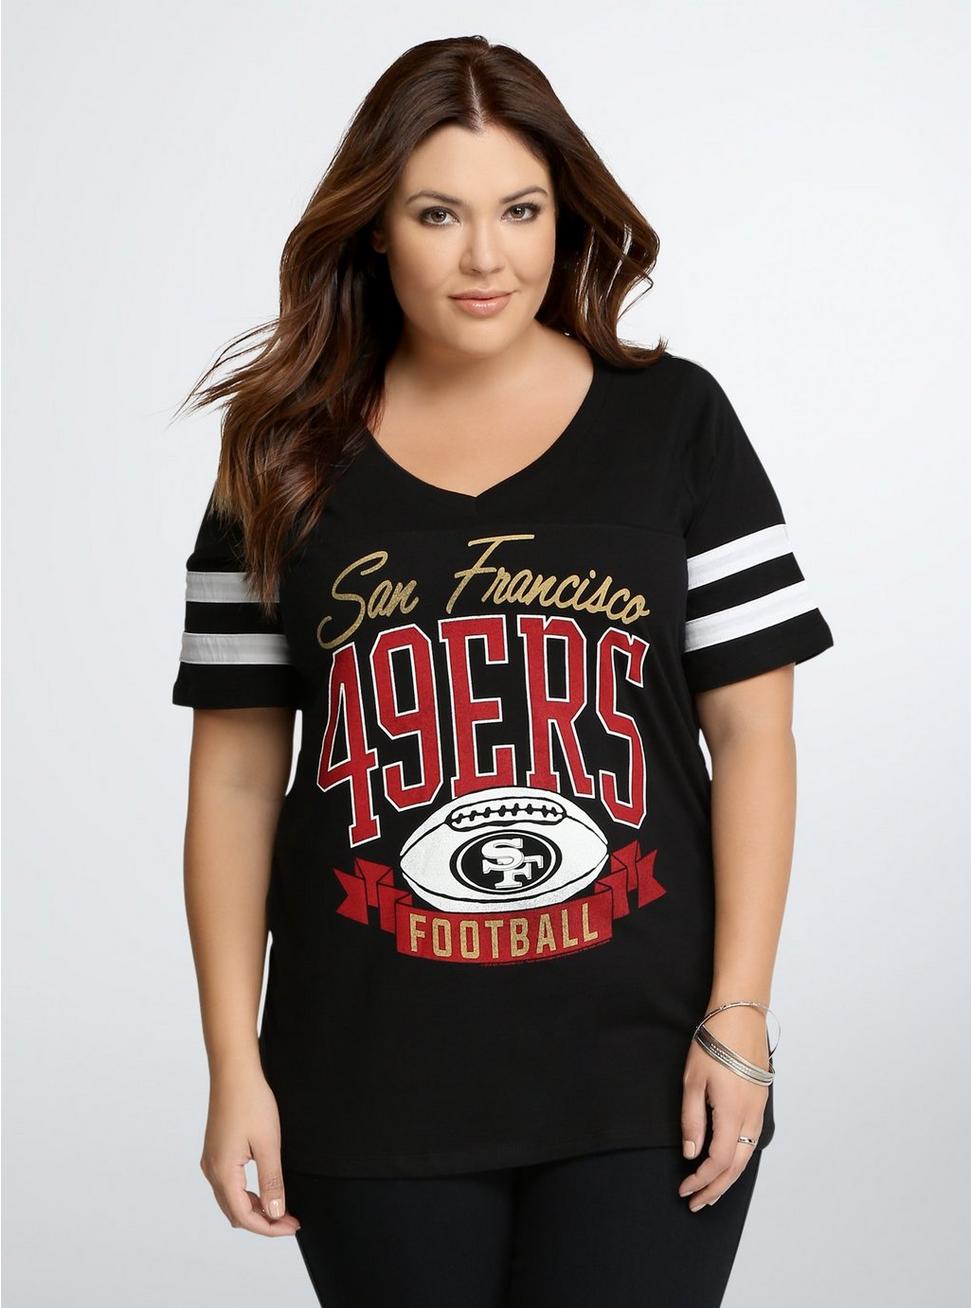 49ers sexy shirt